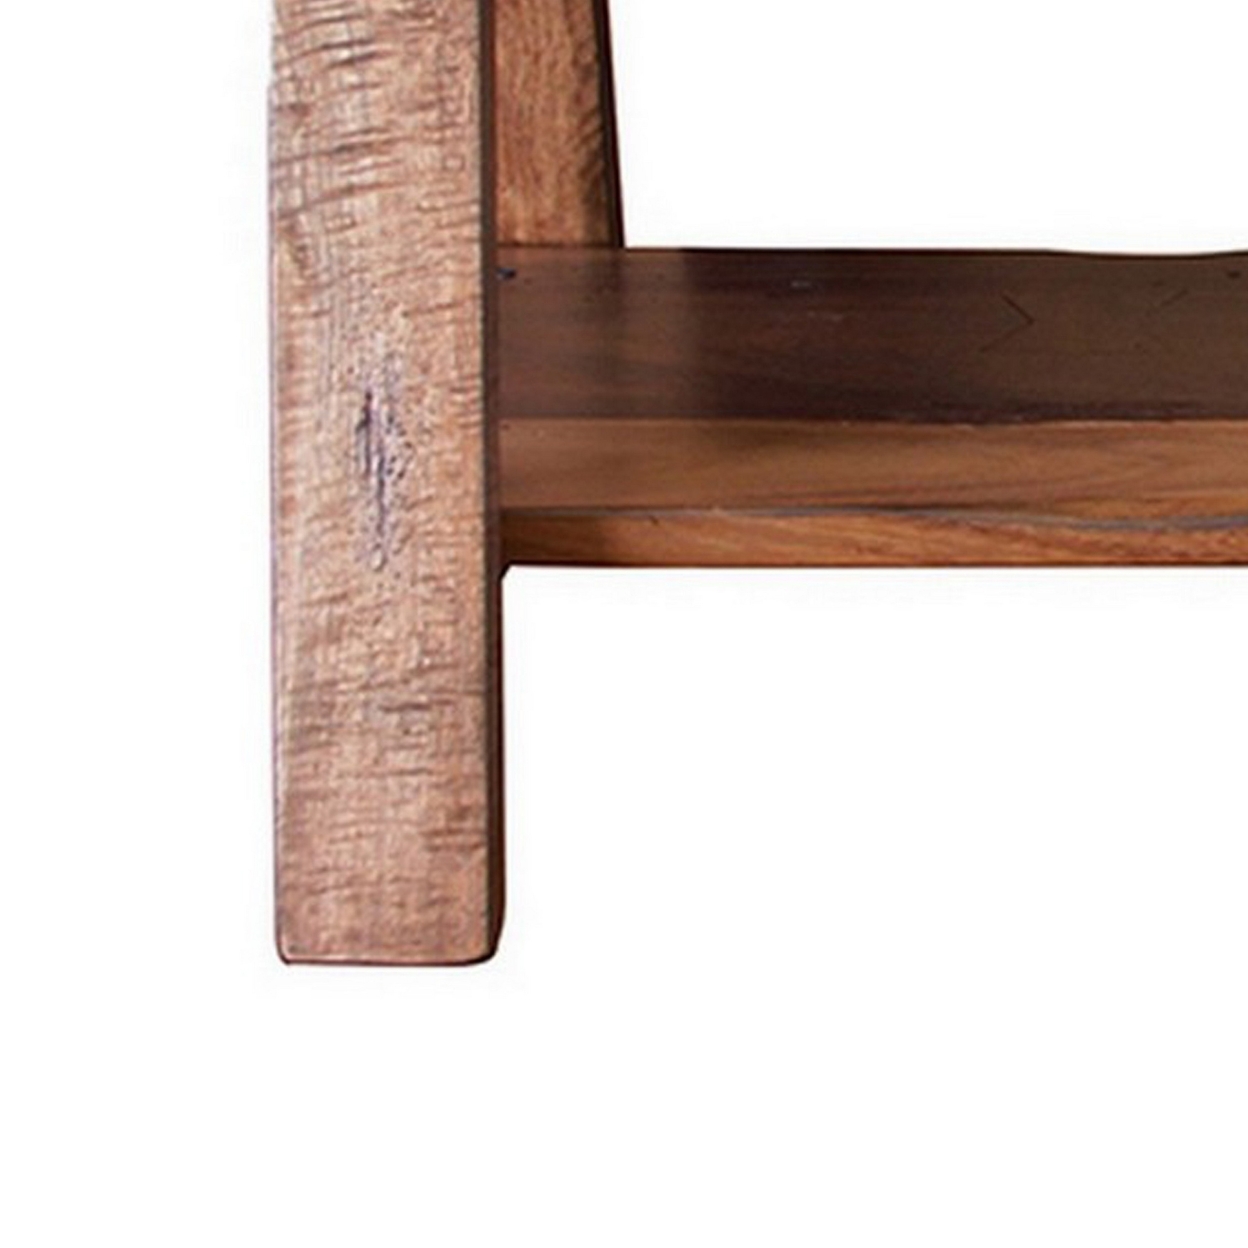 Umey 59 Inch Bench, Solid Mango Wood With Grain Details, 1 Shelf, Brown - Saltoro Sherpi